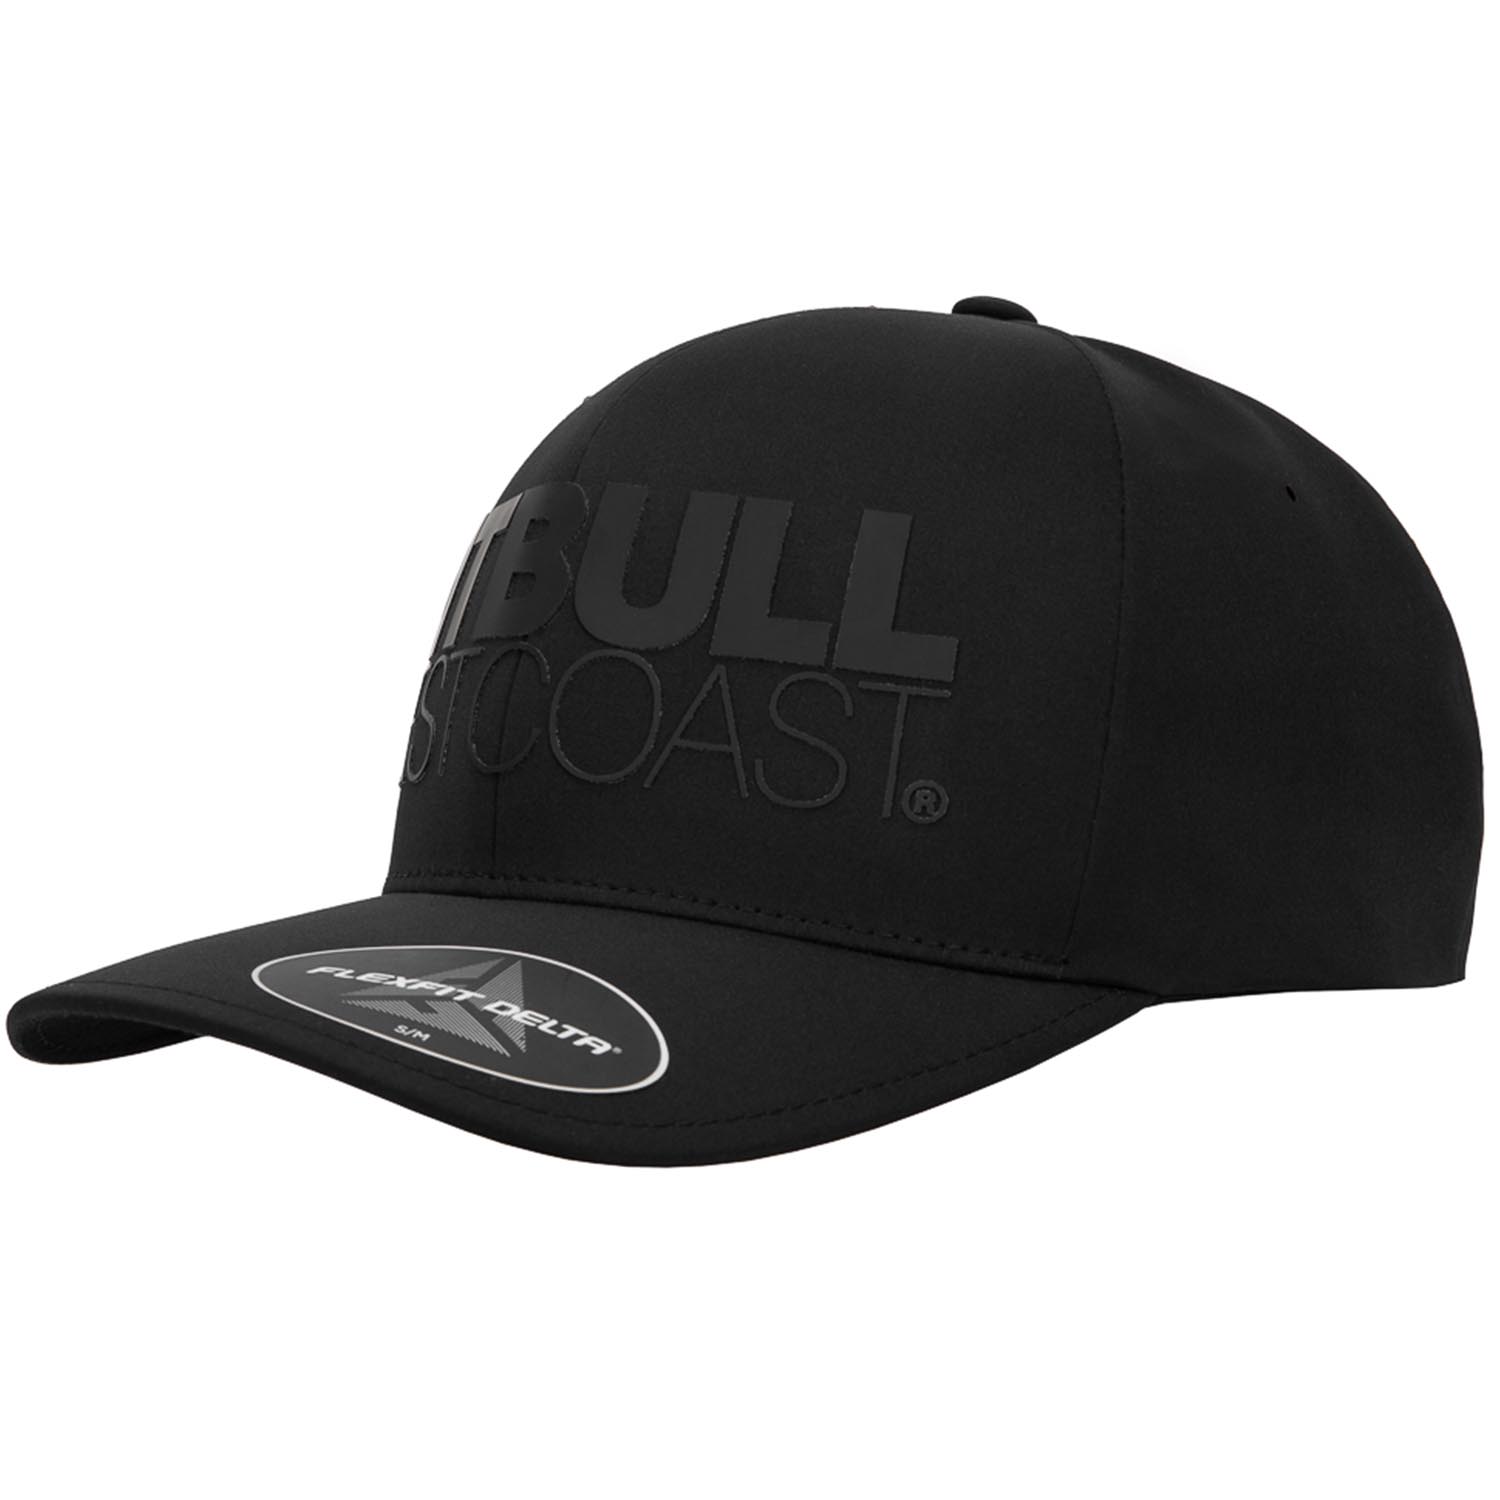 Pit Bull West Coast Fitted Full Cap, TNT, schwarz